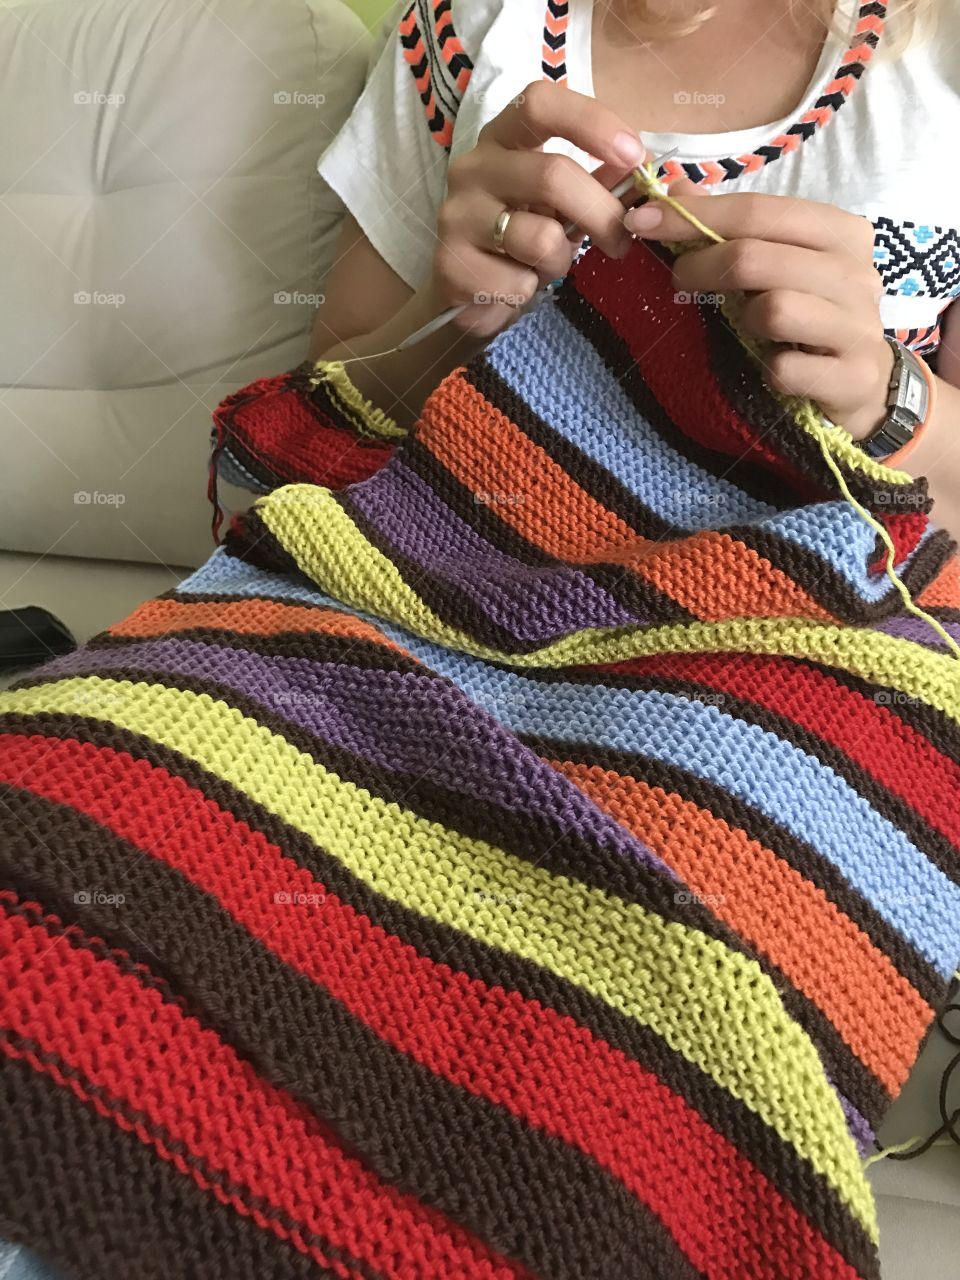 Knitting a bright blanket